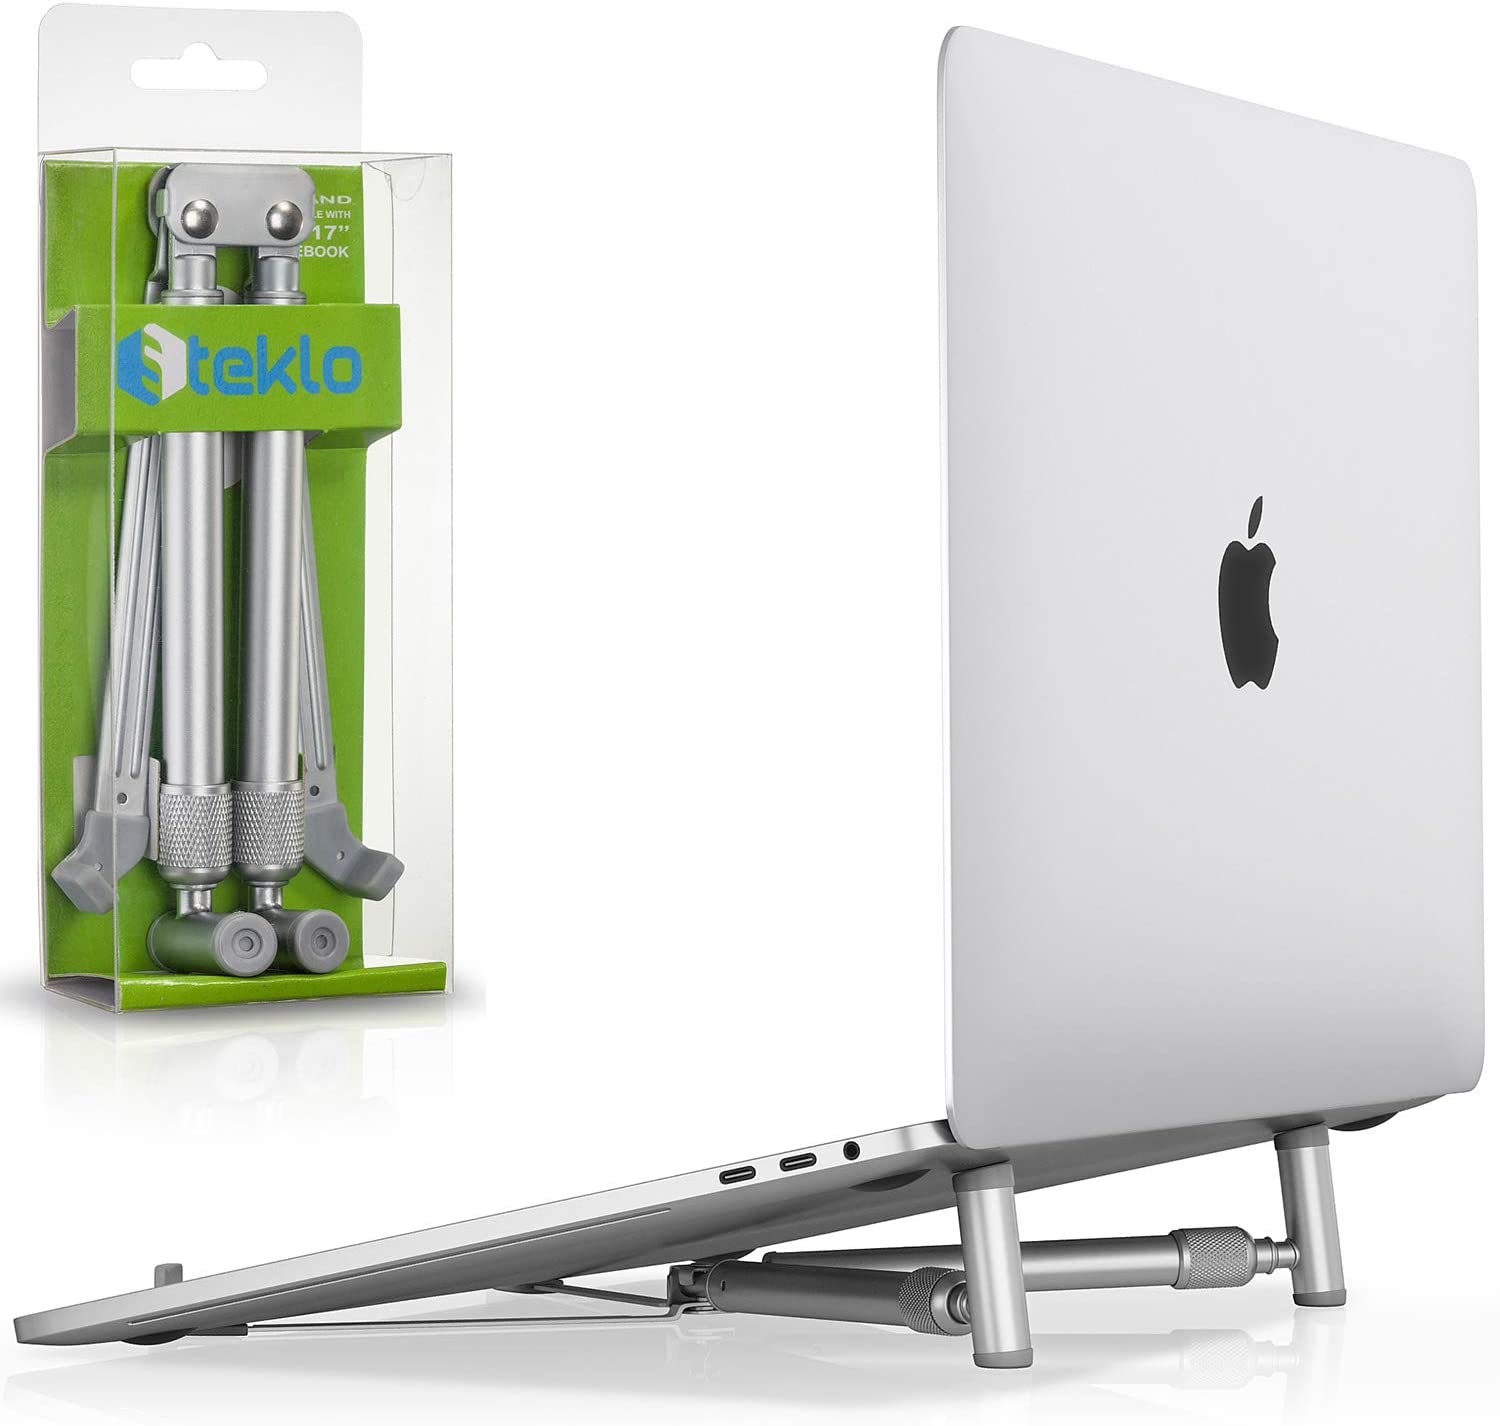 Foldable aluminum laptop stand